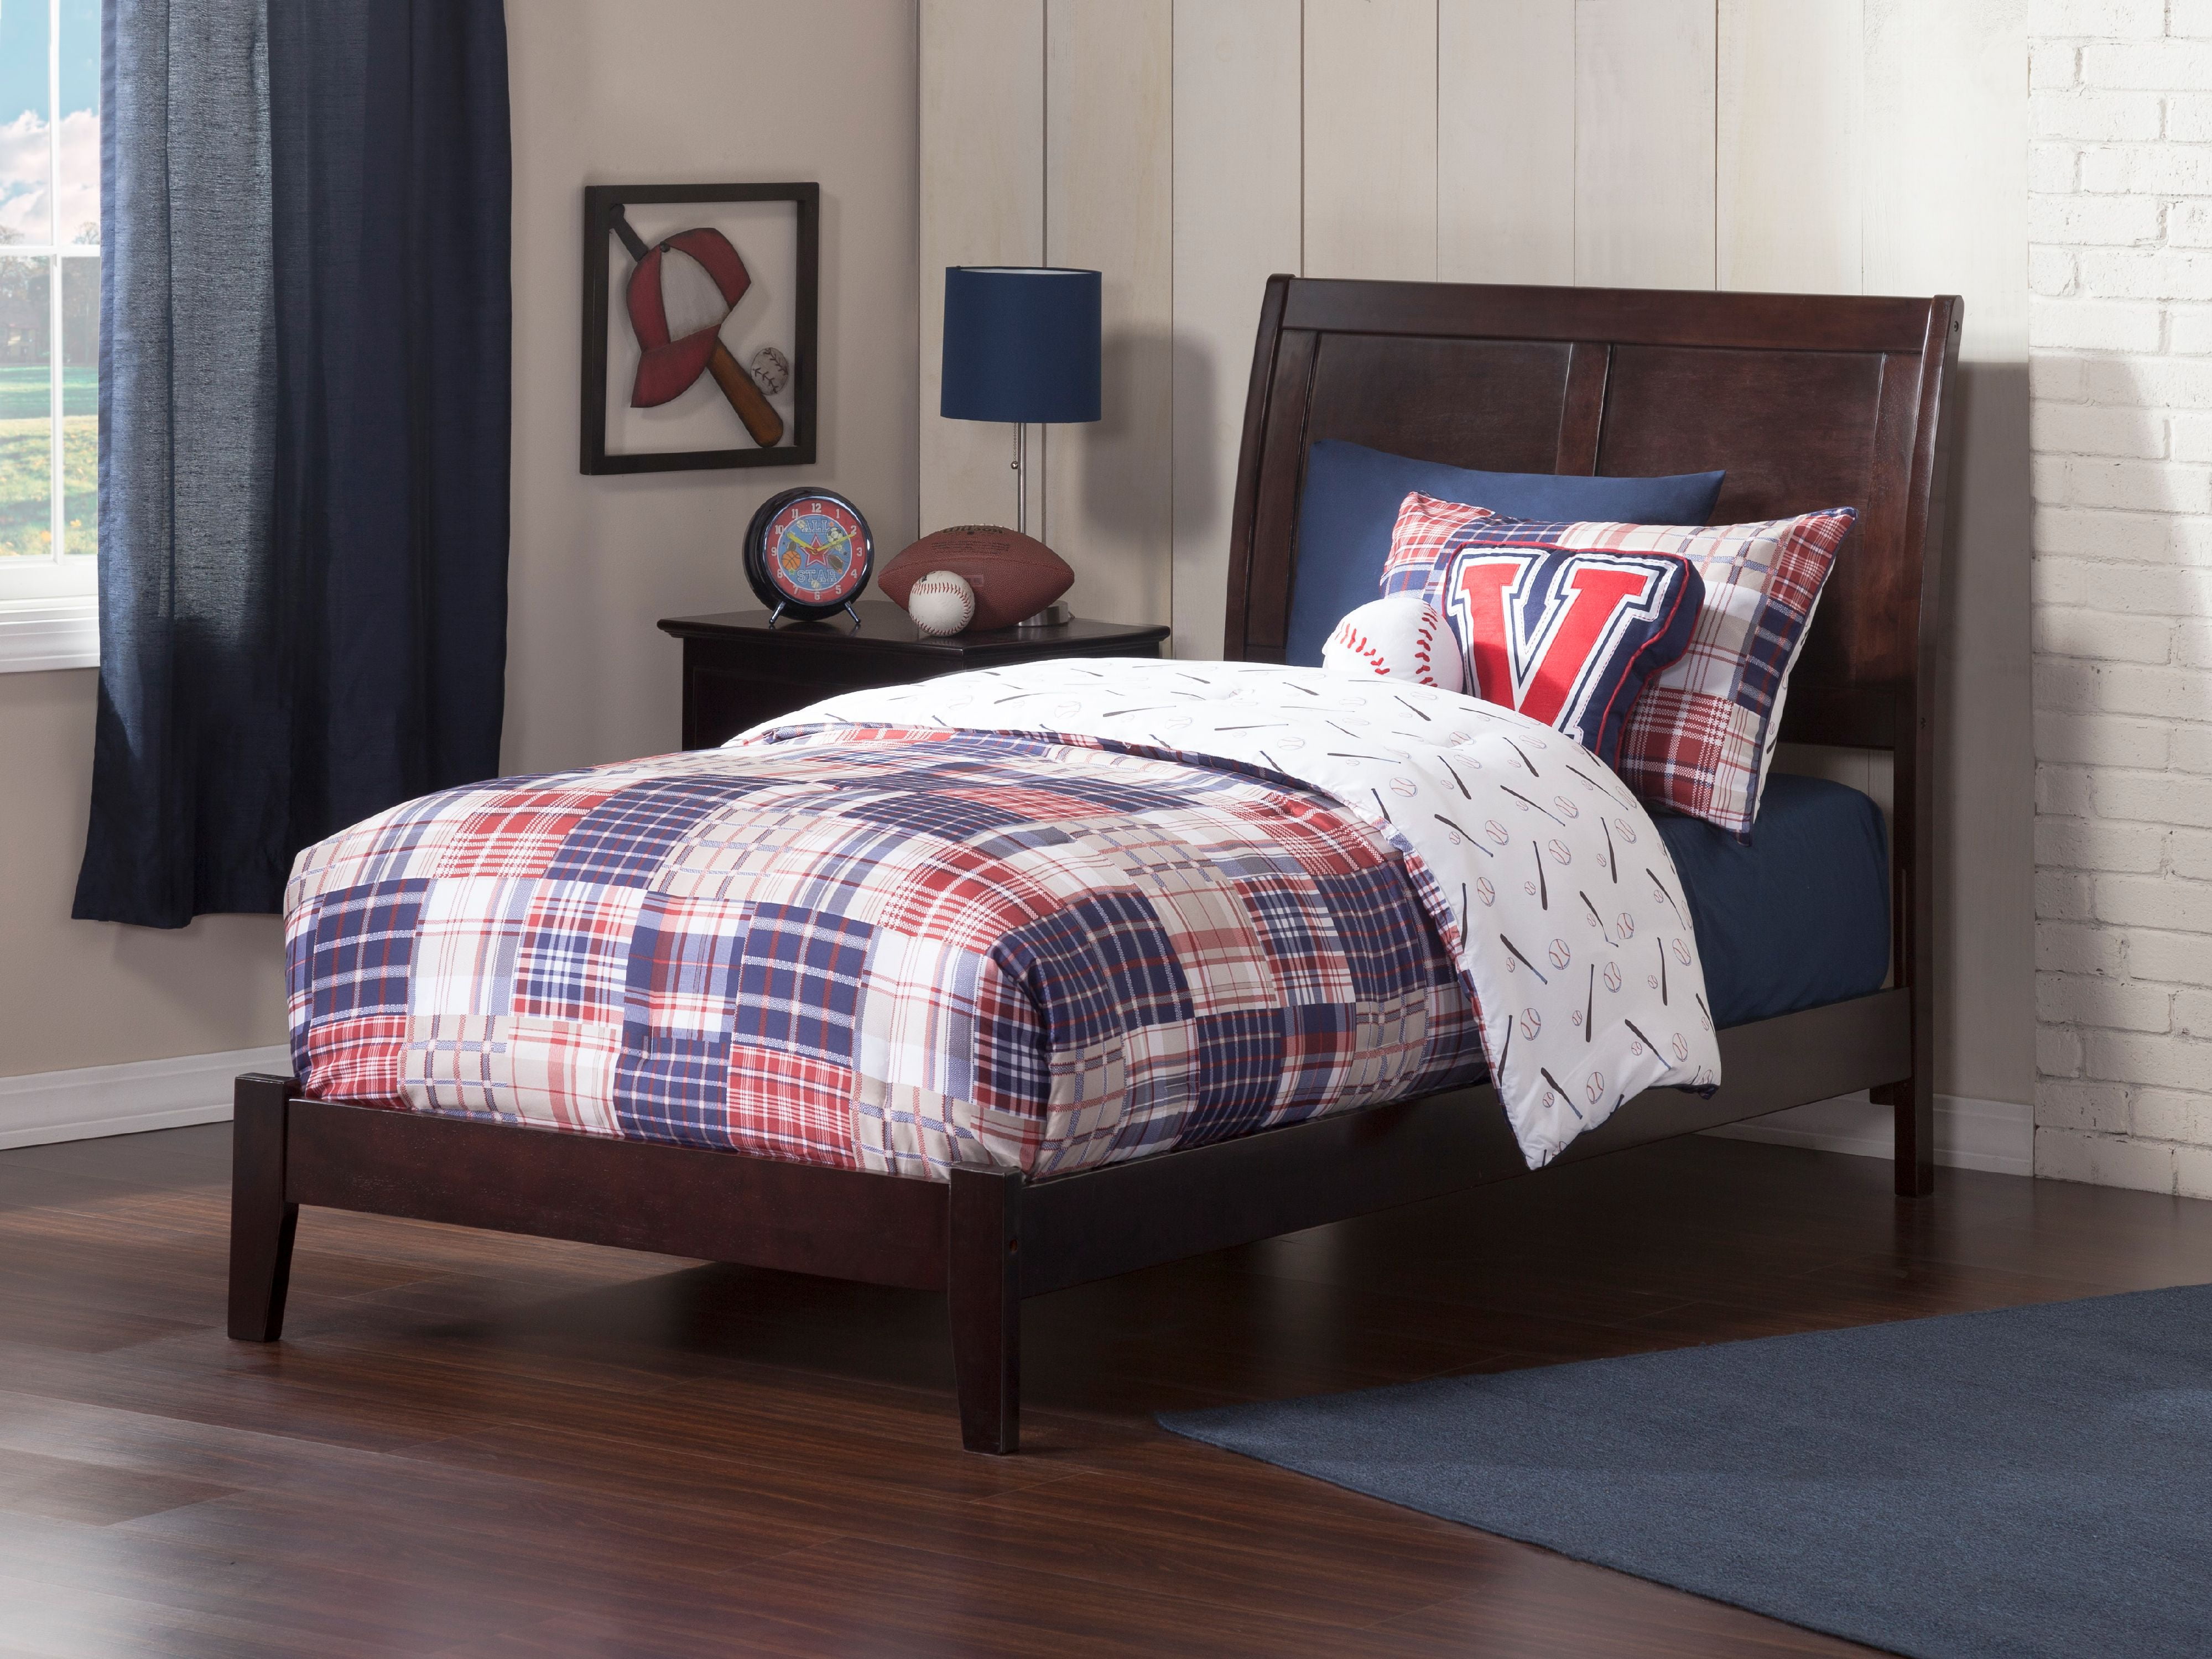 sears twin bed mattress set